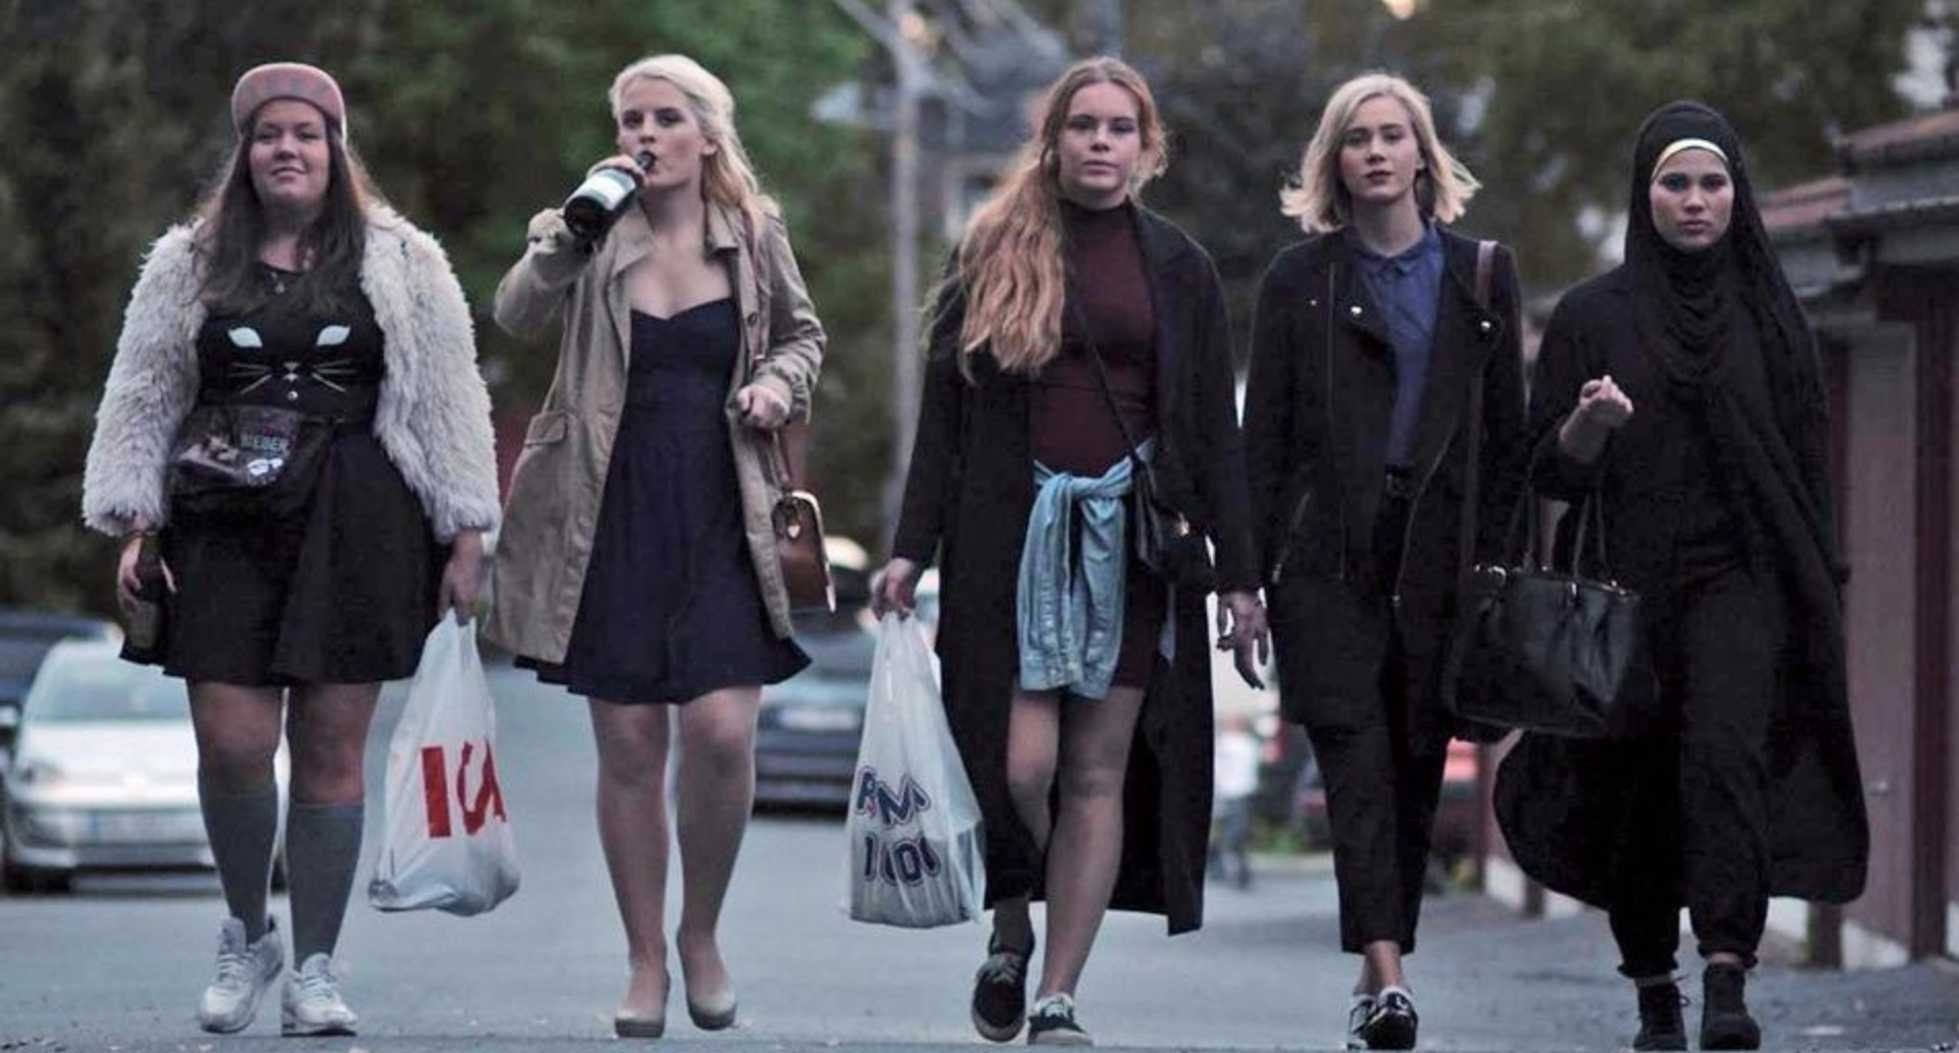 Form left to right: Chris, Vilde, Eva, Noora, Sana walking towards the camera together on the street.